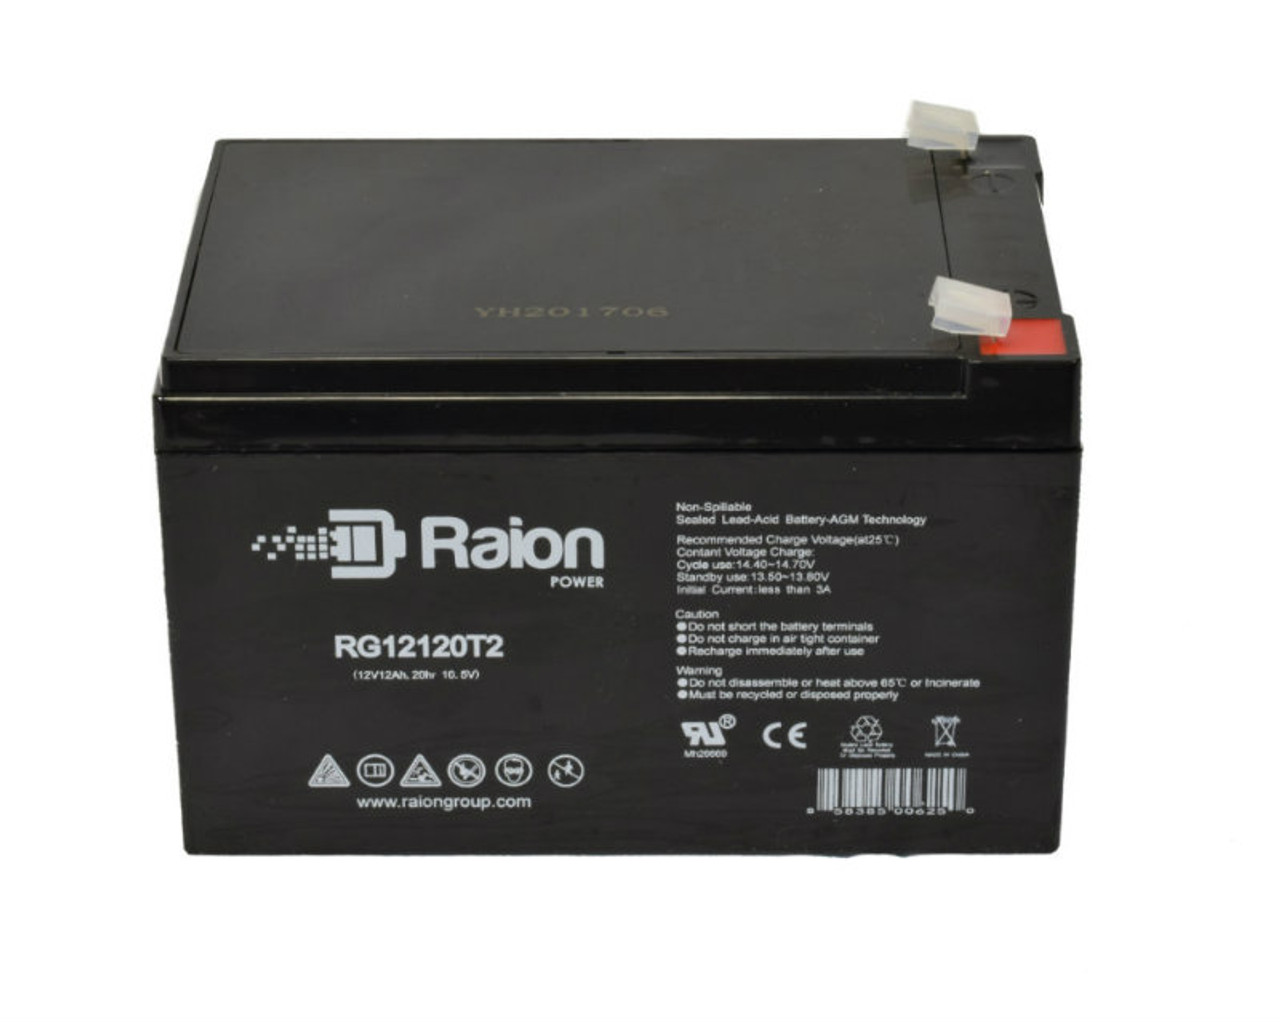 Raion Power RG12120T2 SLA Battery for Bosfa EVX12-12